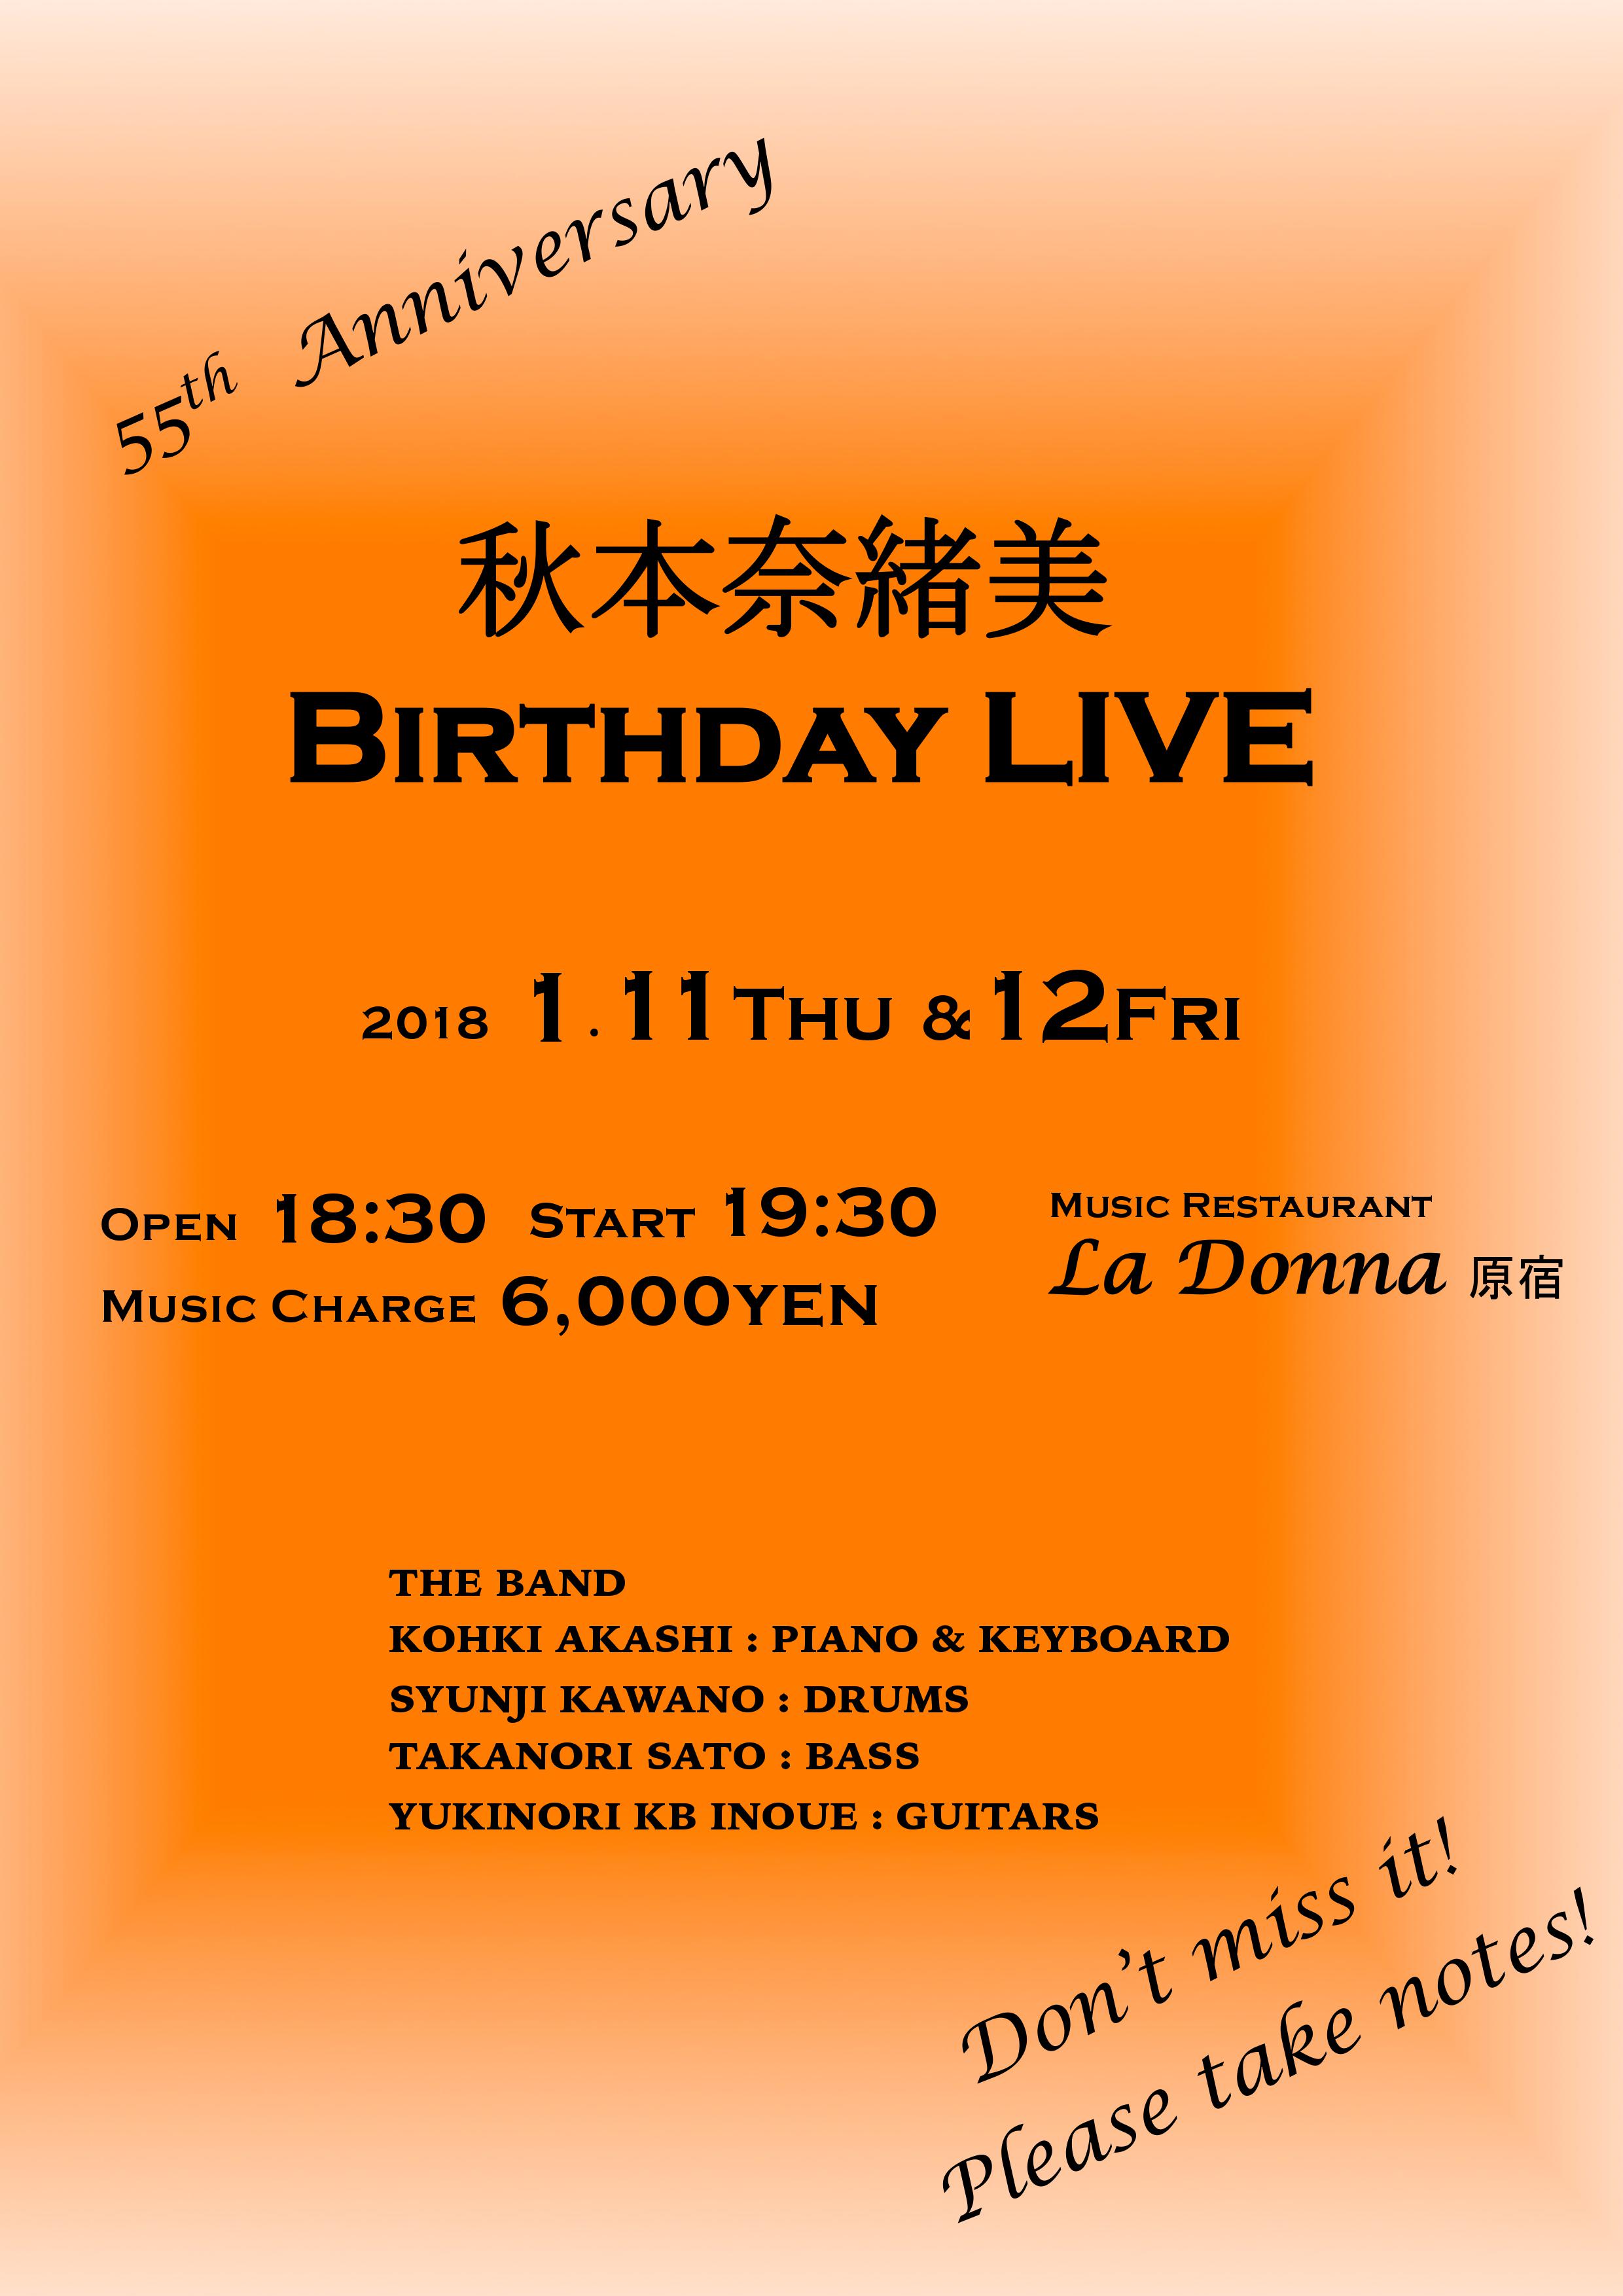 55th Anniversary 秋本奈緒美 BIRTHDAY LIVE